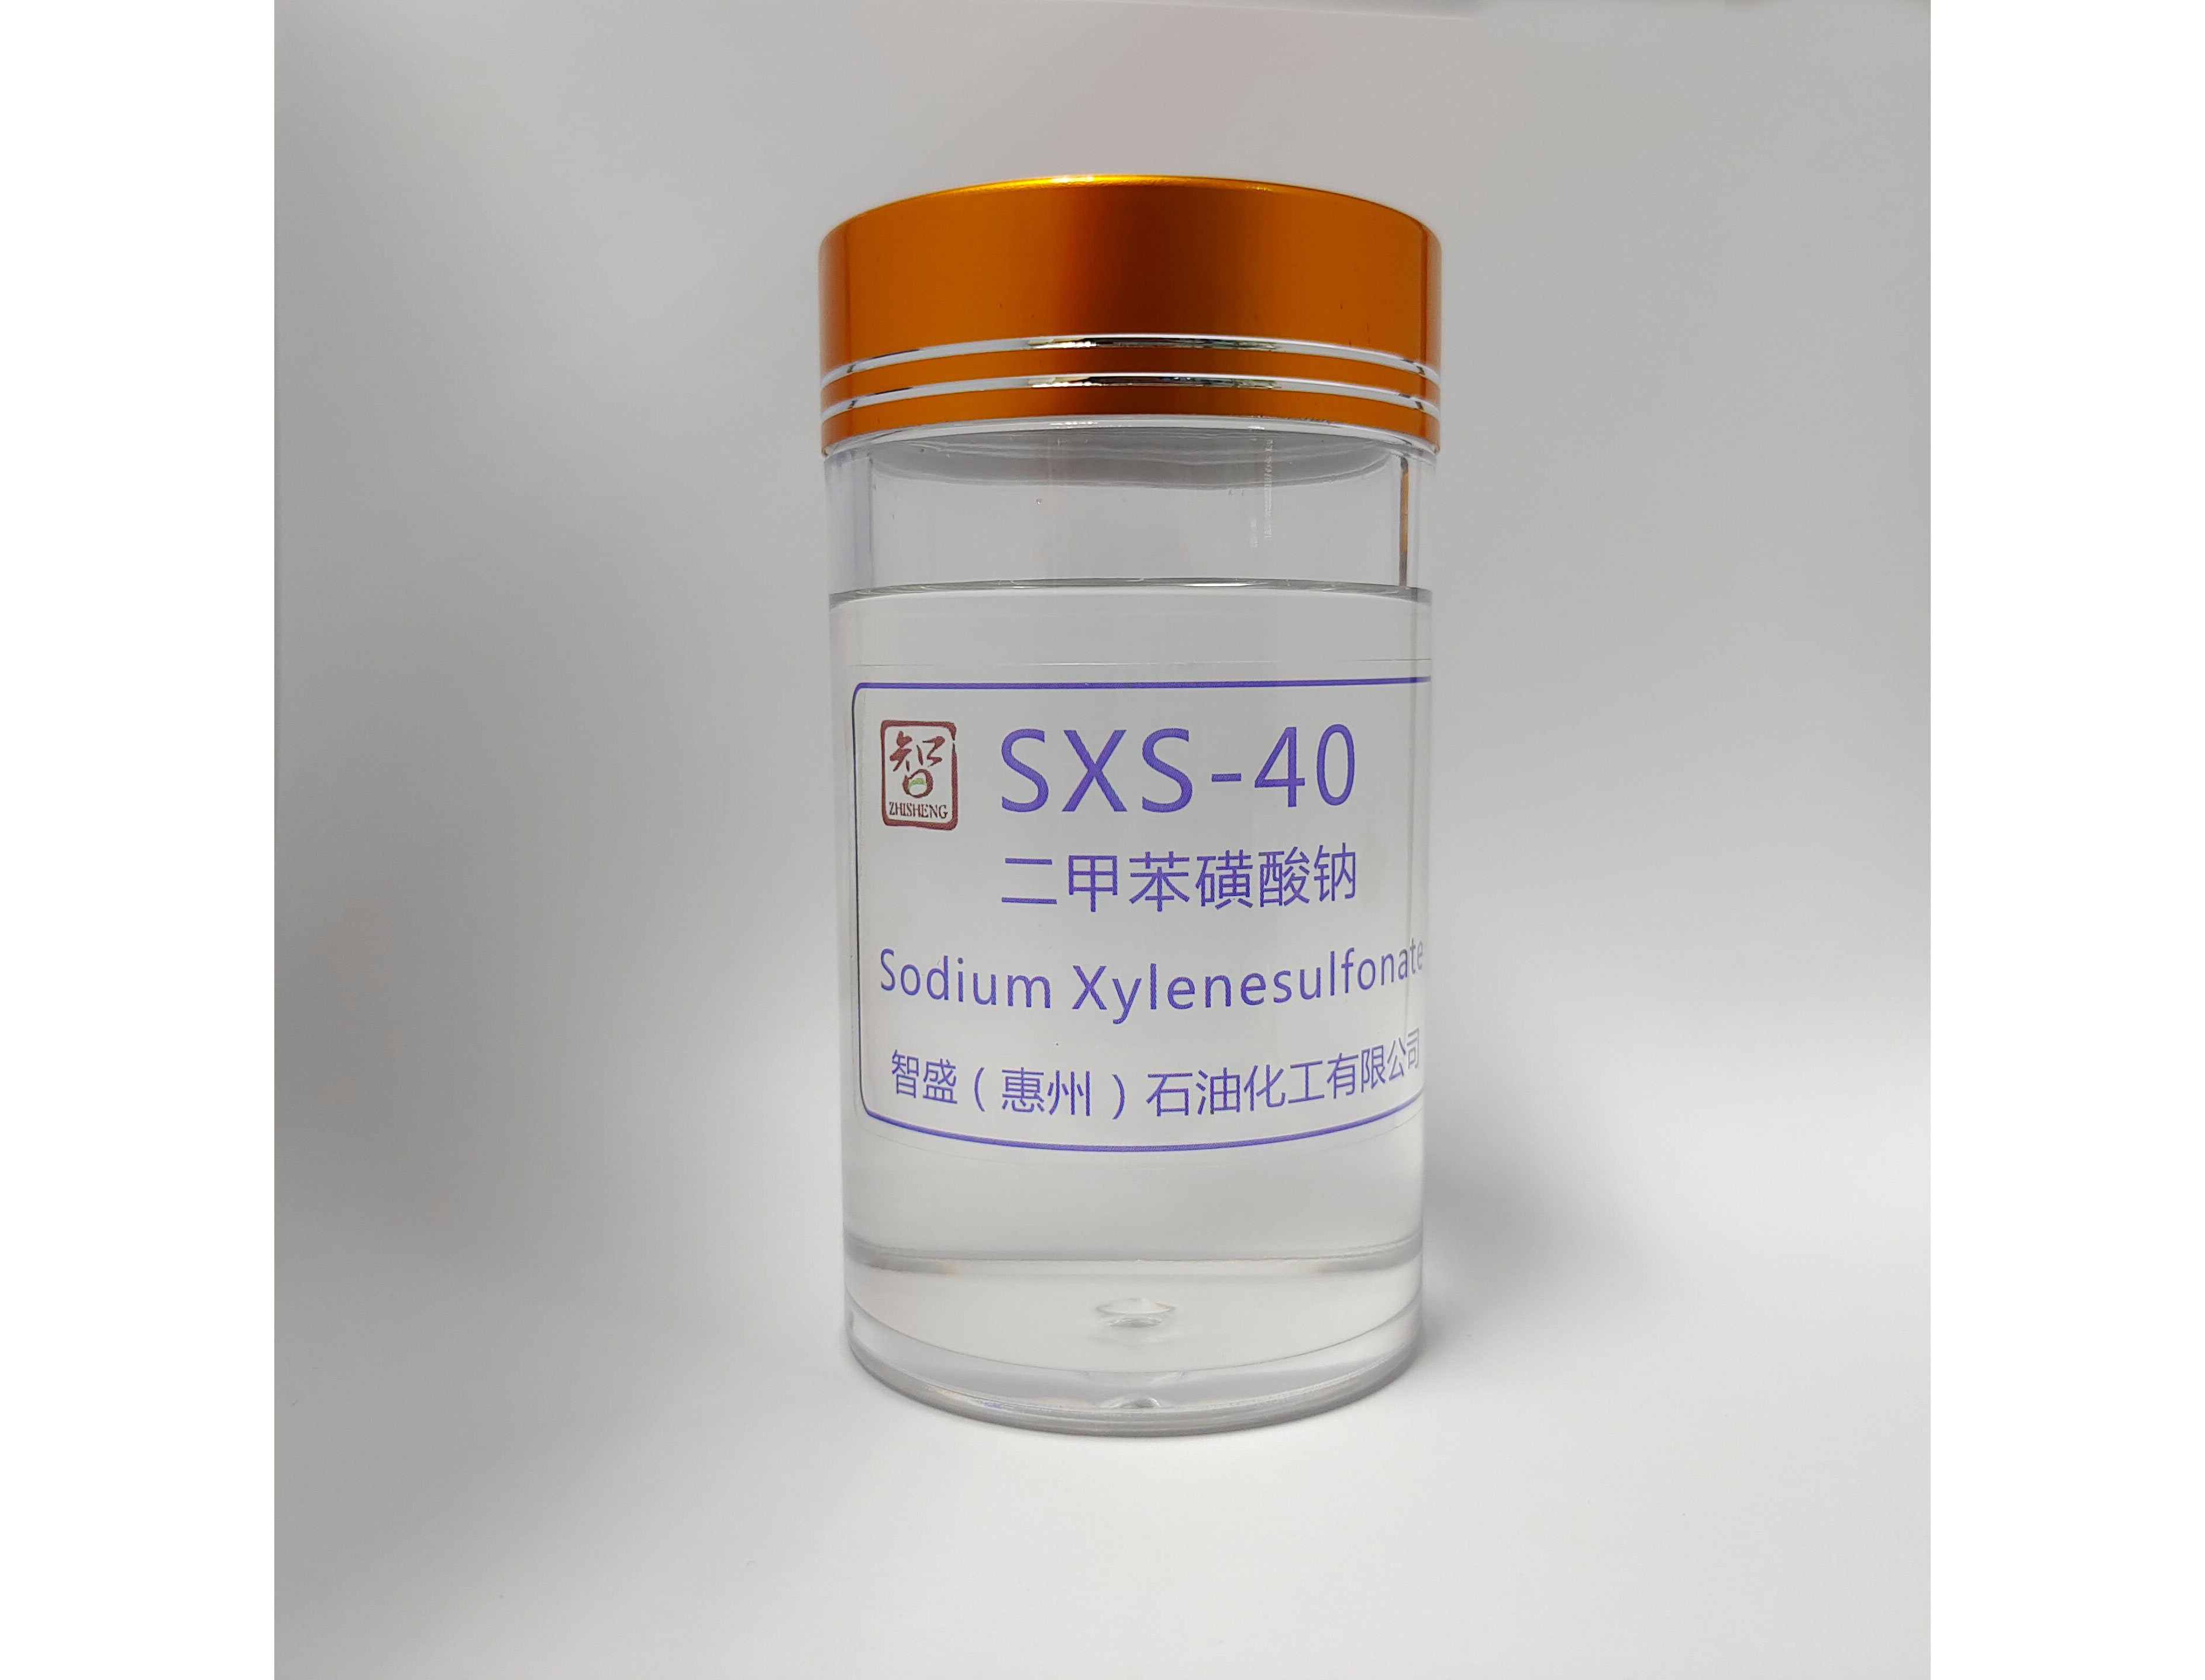   j  二甲苯磺酸钠（SXS-40）